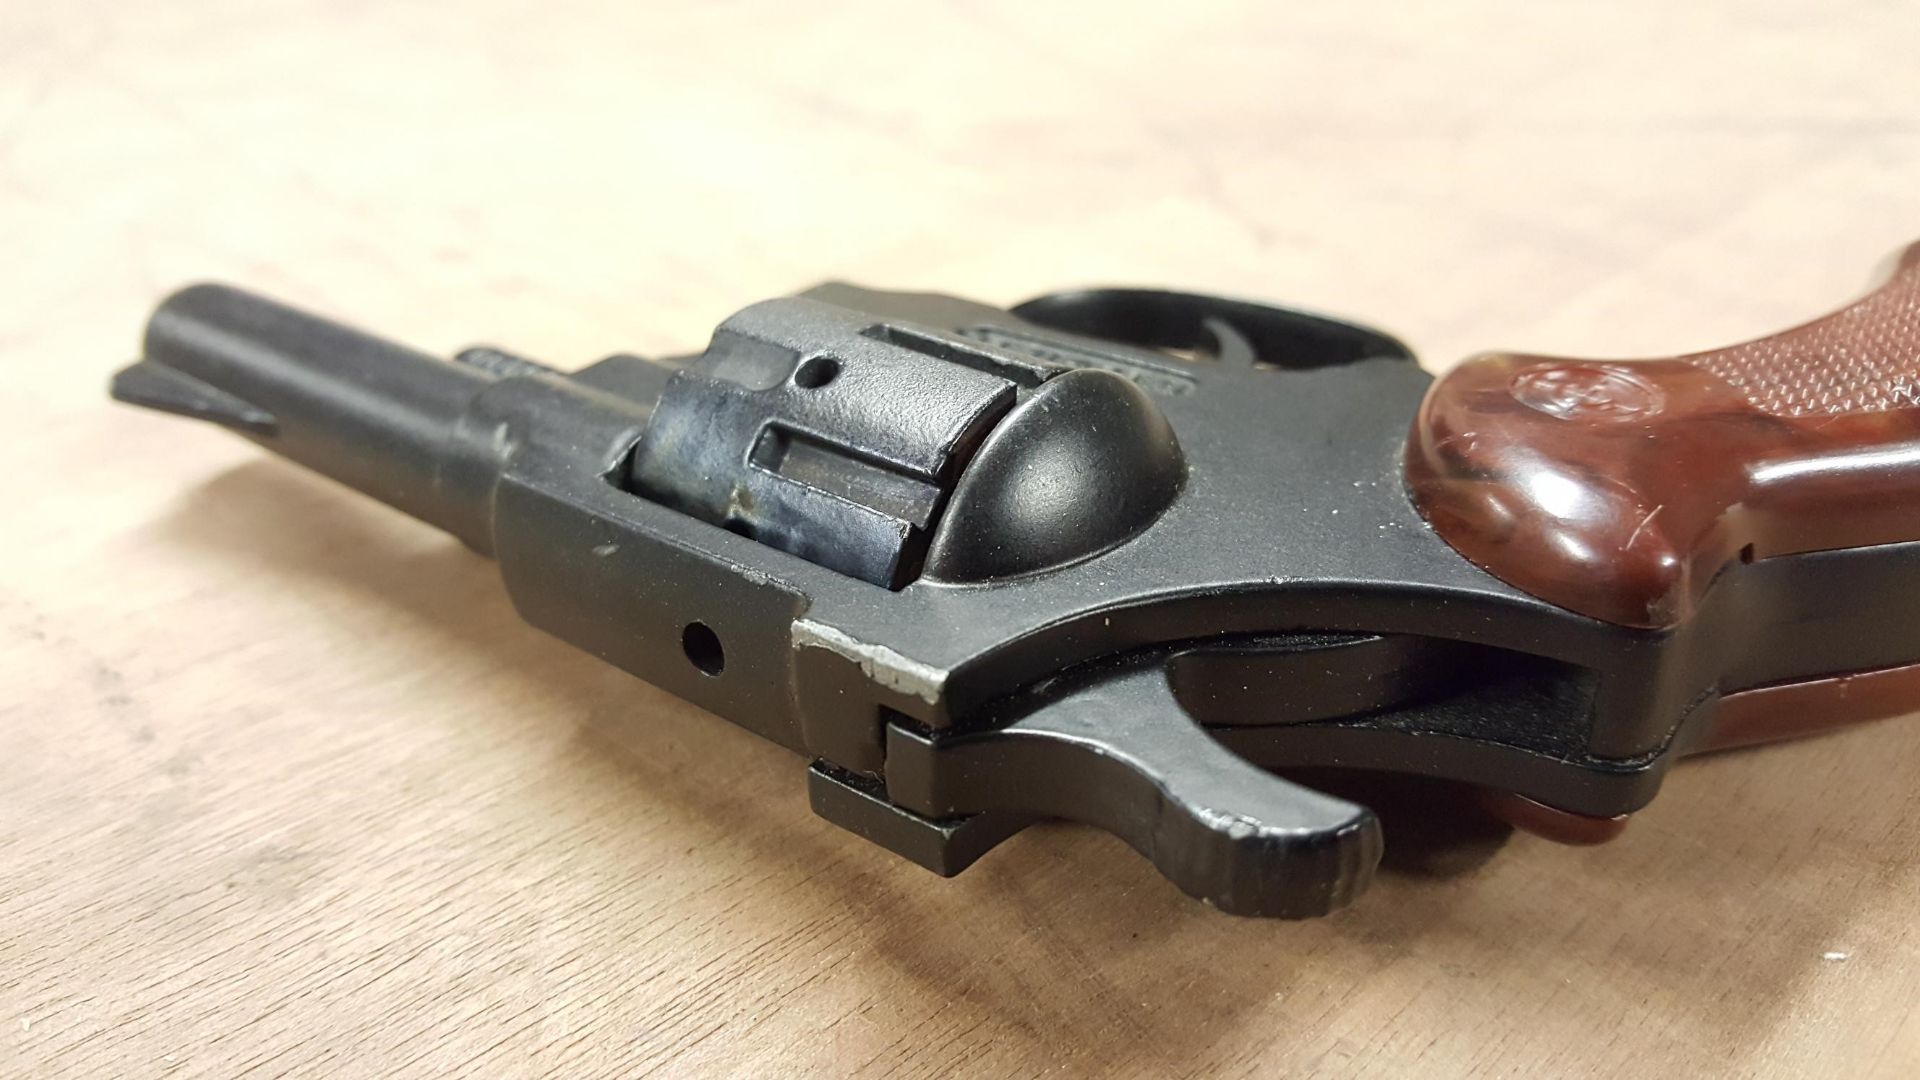 Phoenix Arms Co England starter pistol - Image 2 of 4